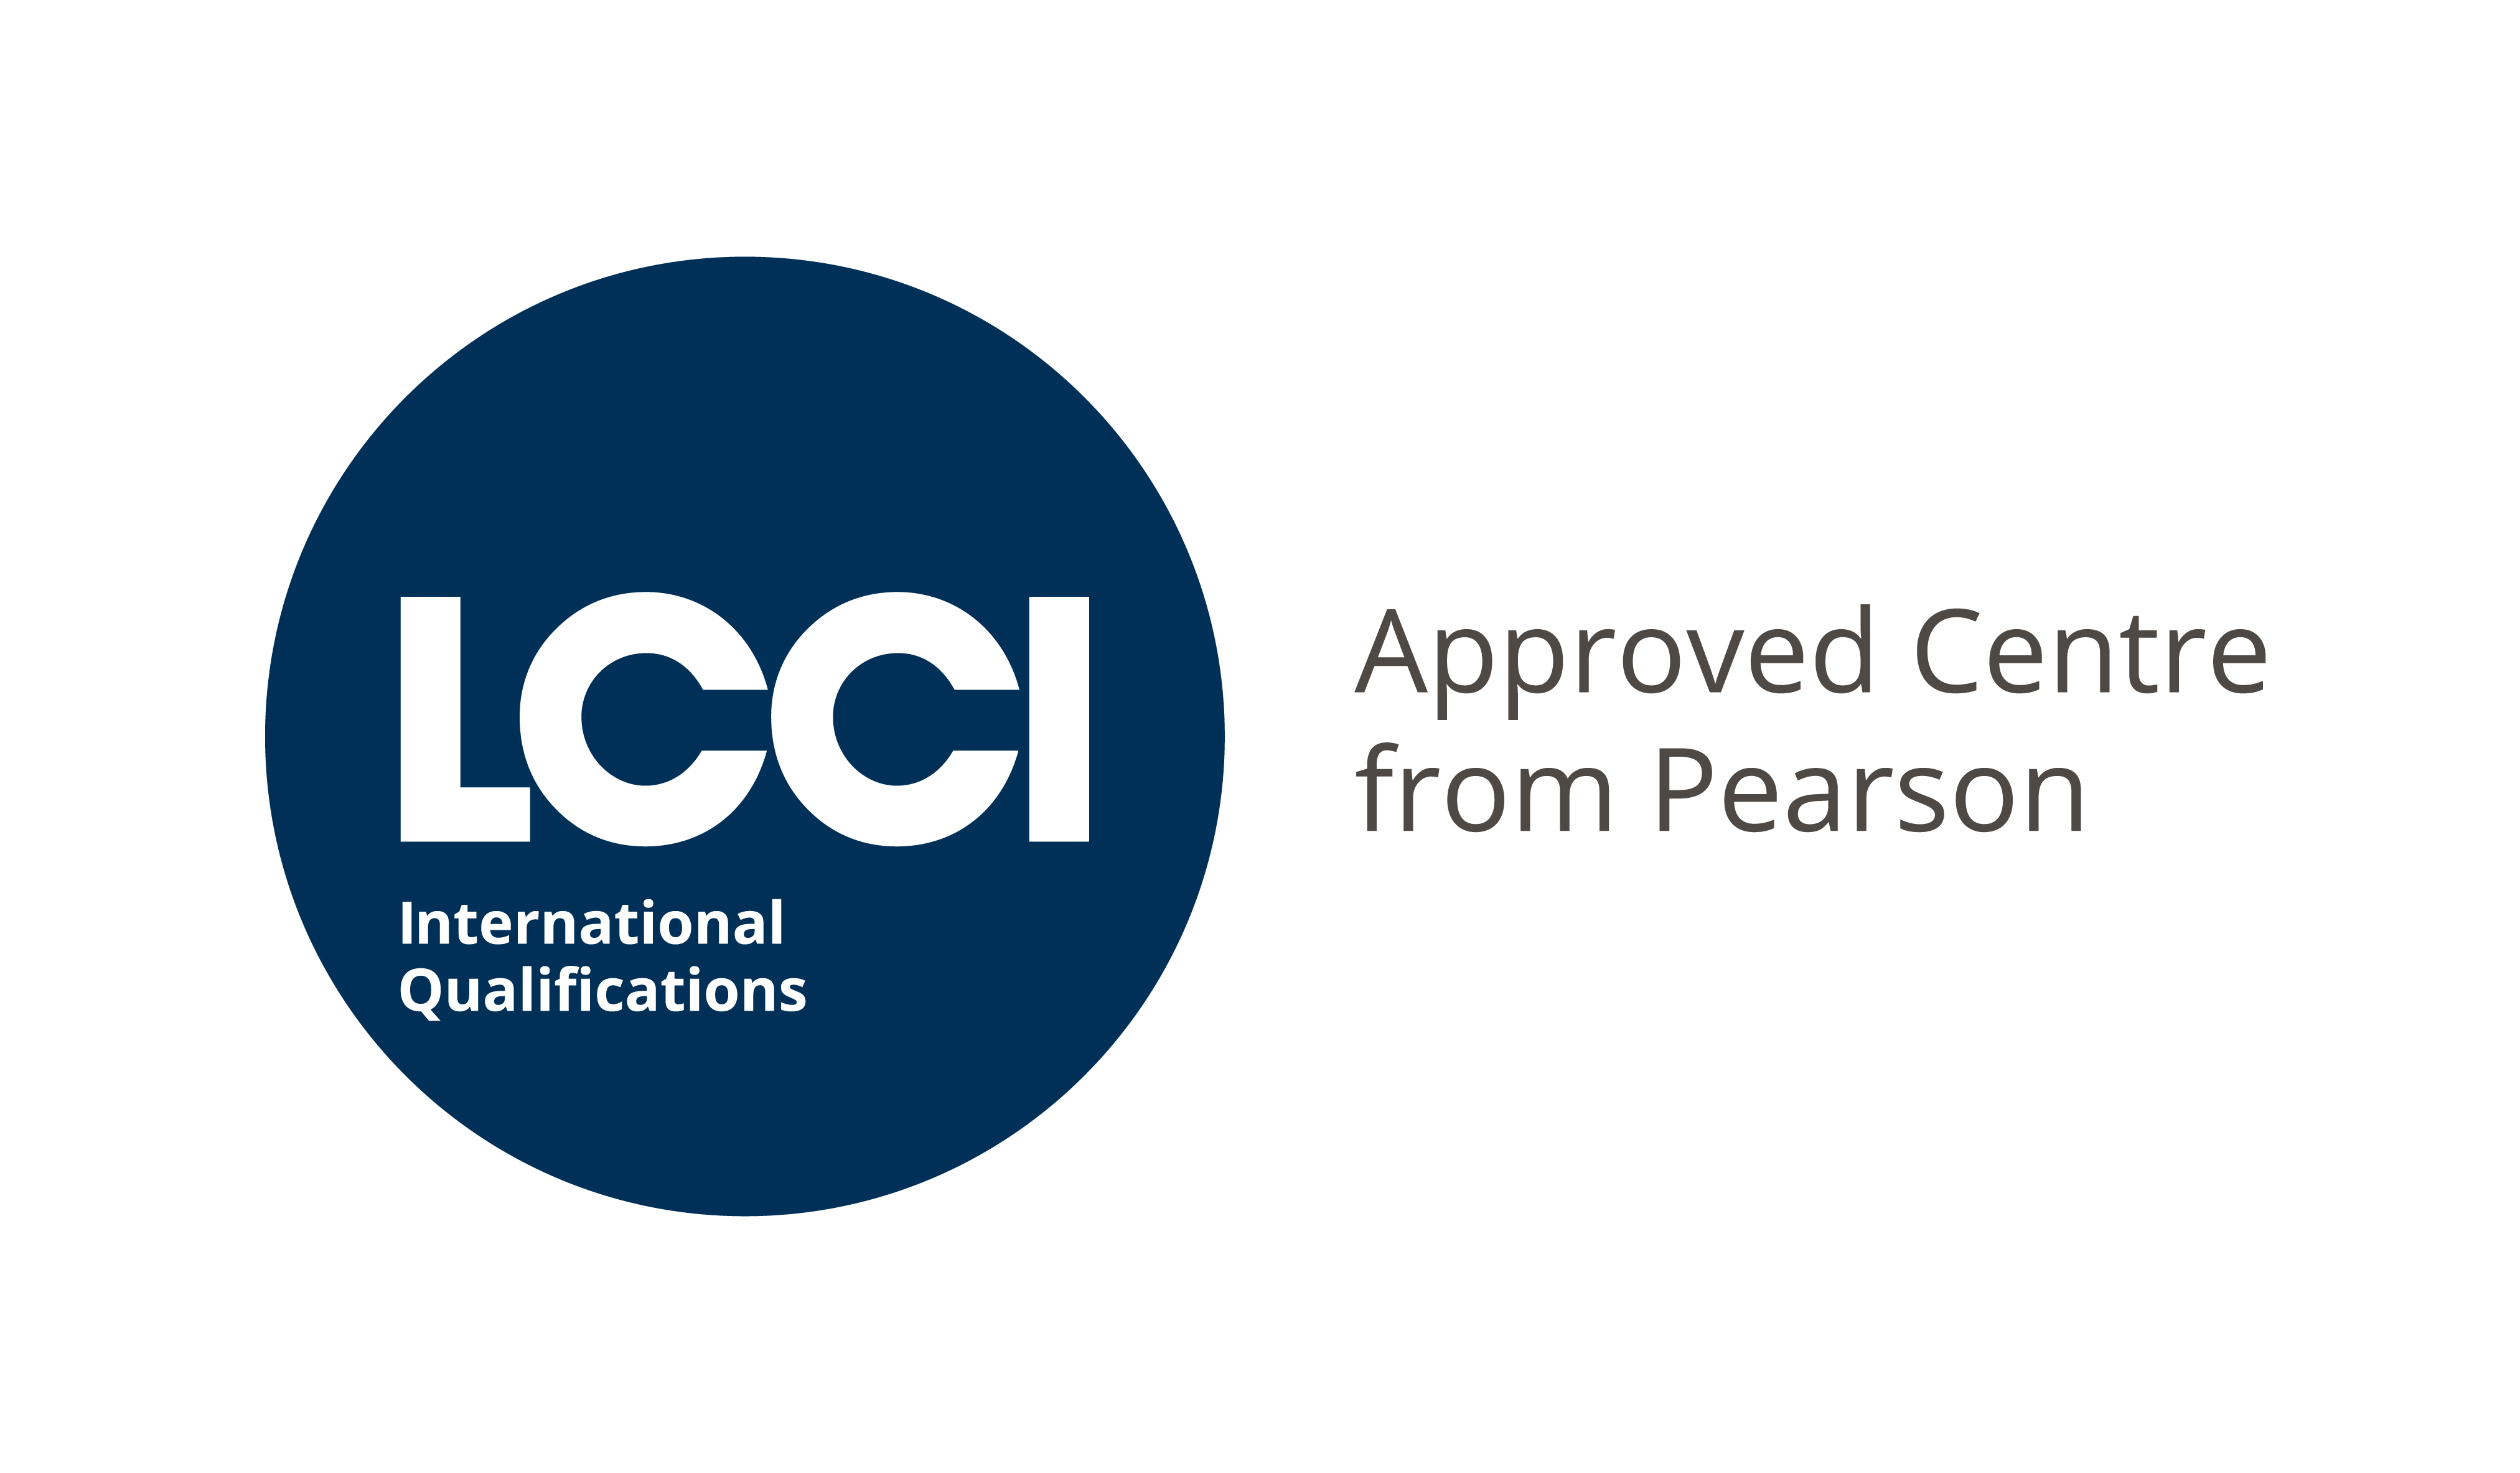 LCCI International Qualifications logo